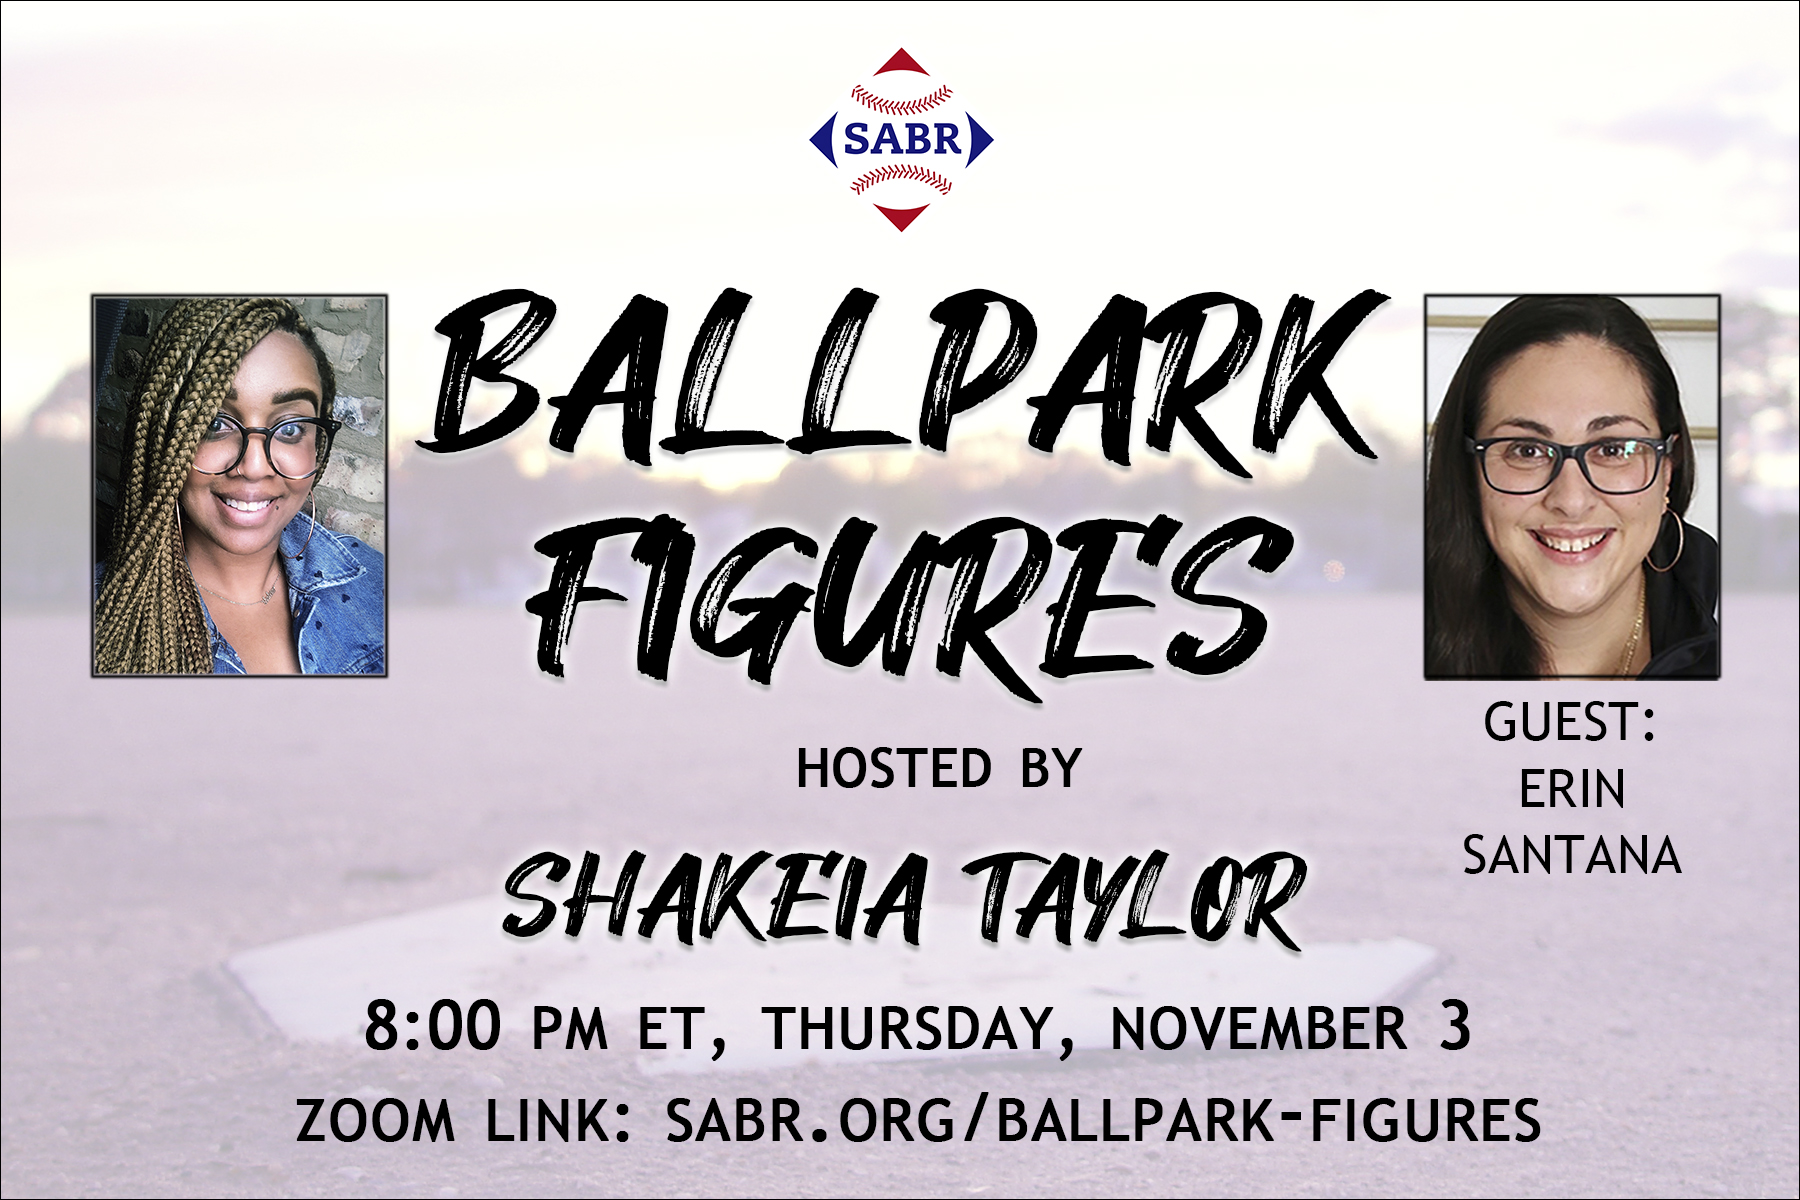 Ballpark Figures with Erin Santana